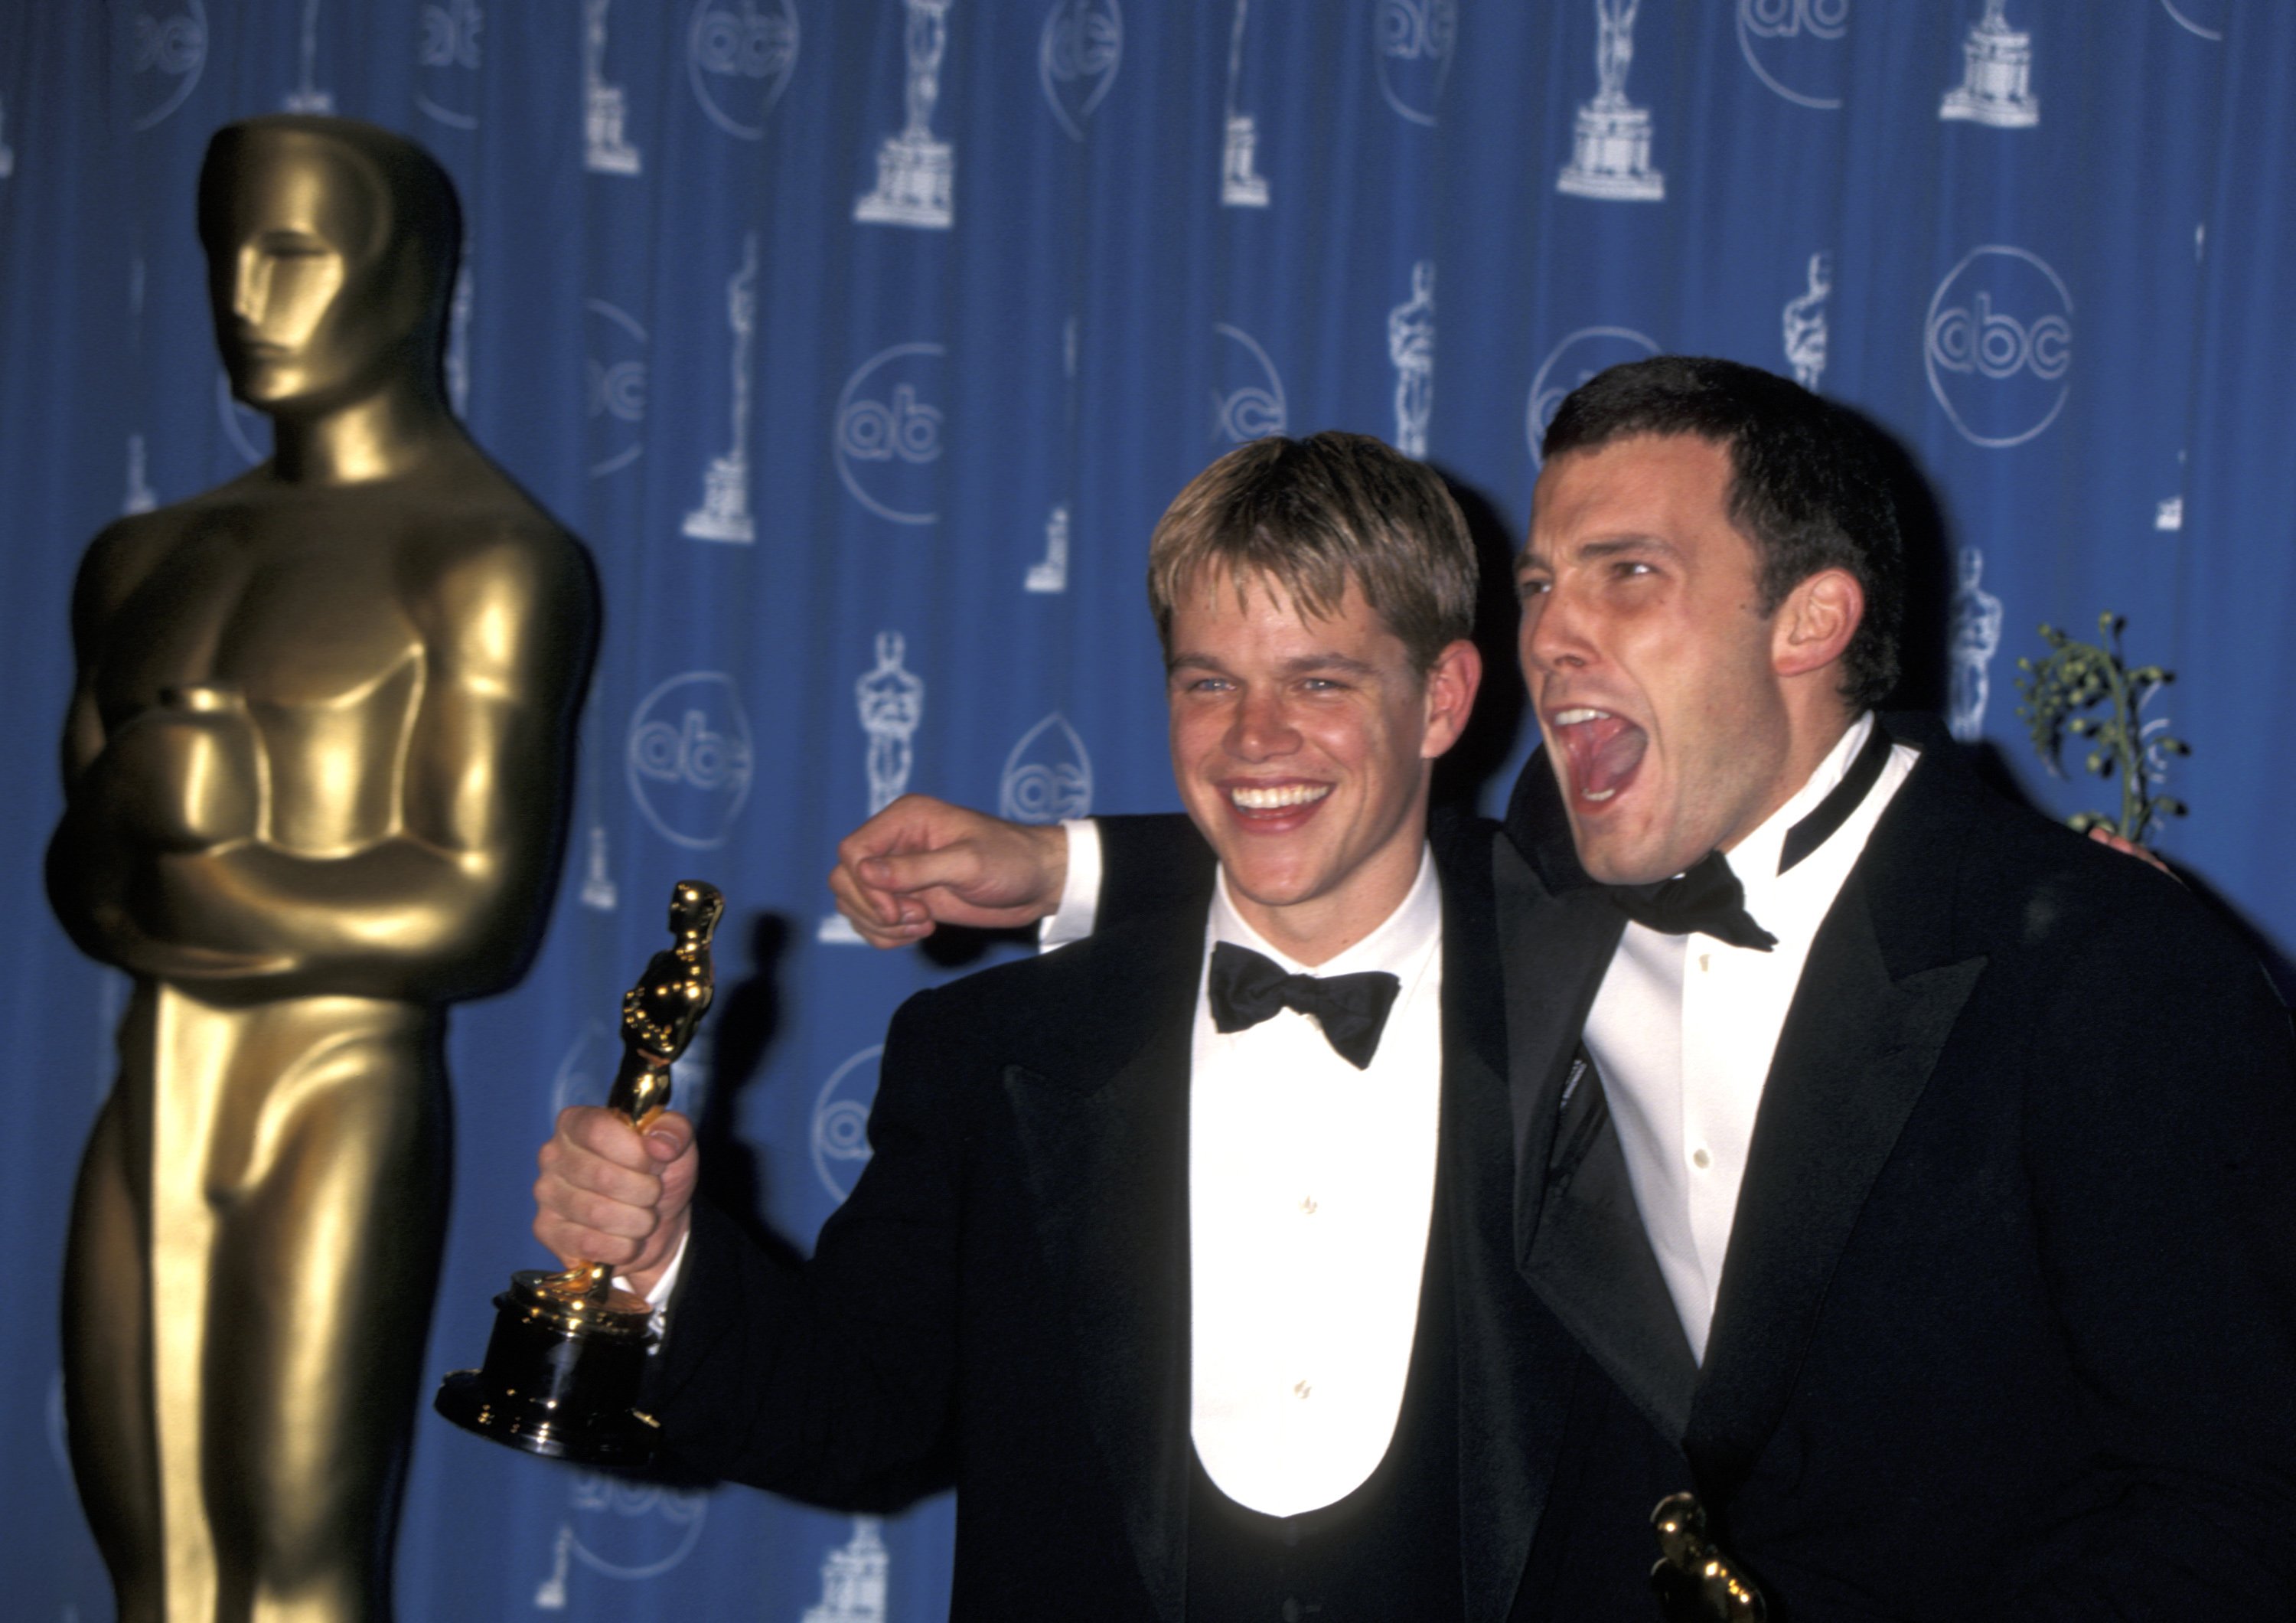 Good Will Hunting Oscar winners Matt Damon and Ben Affleck hold their Oscar backstage